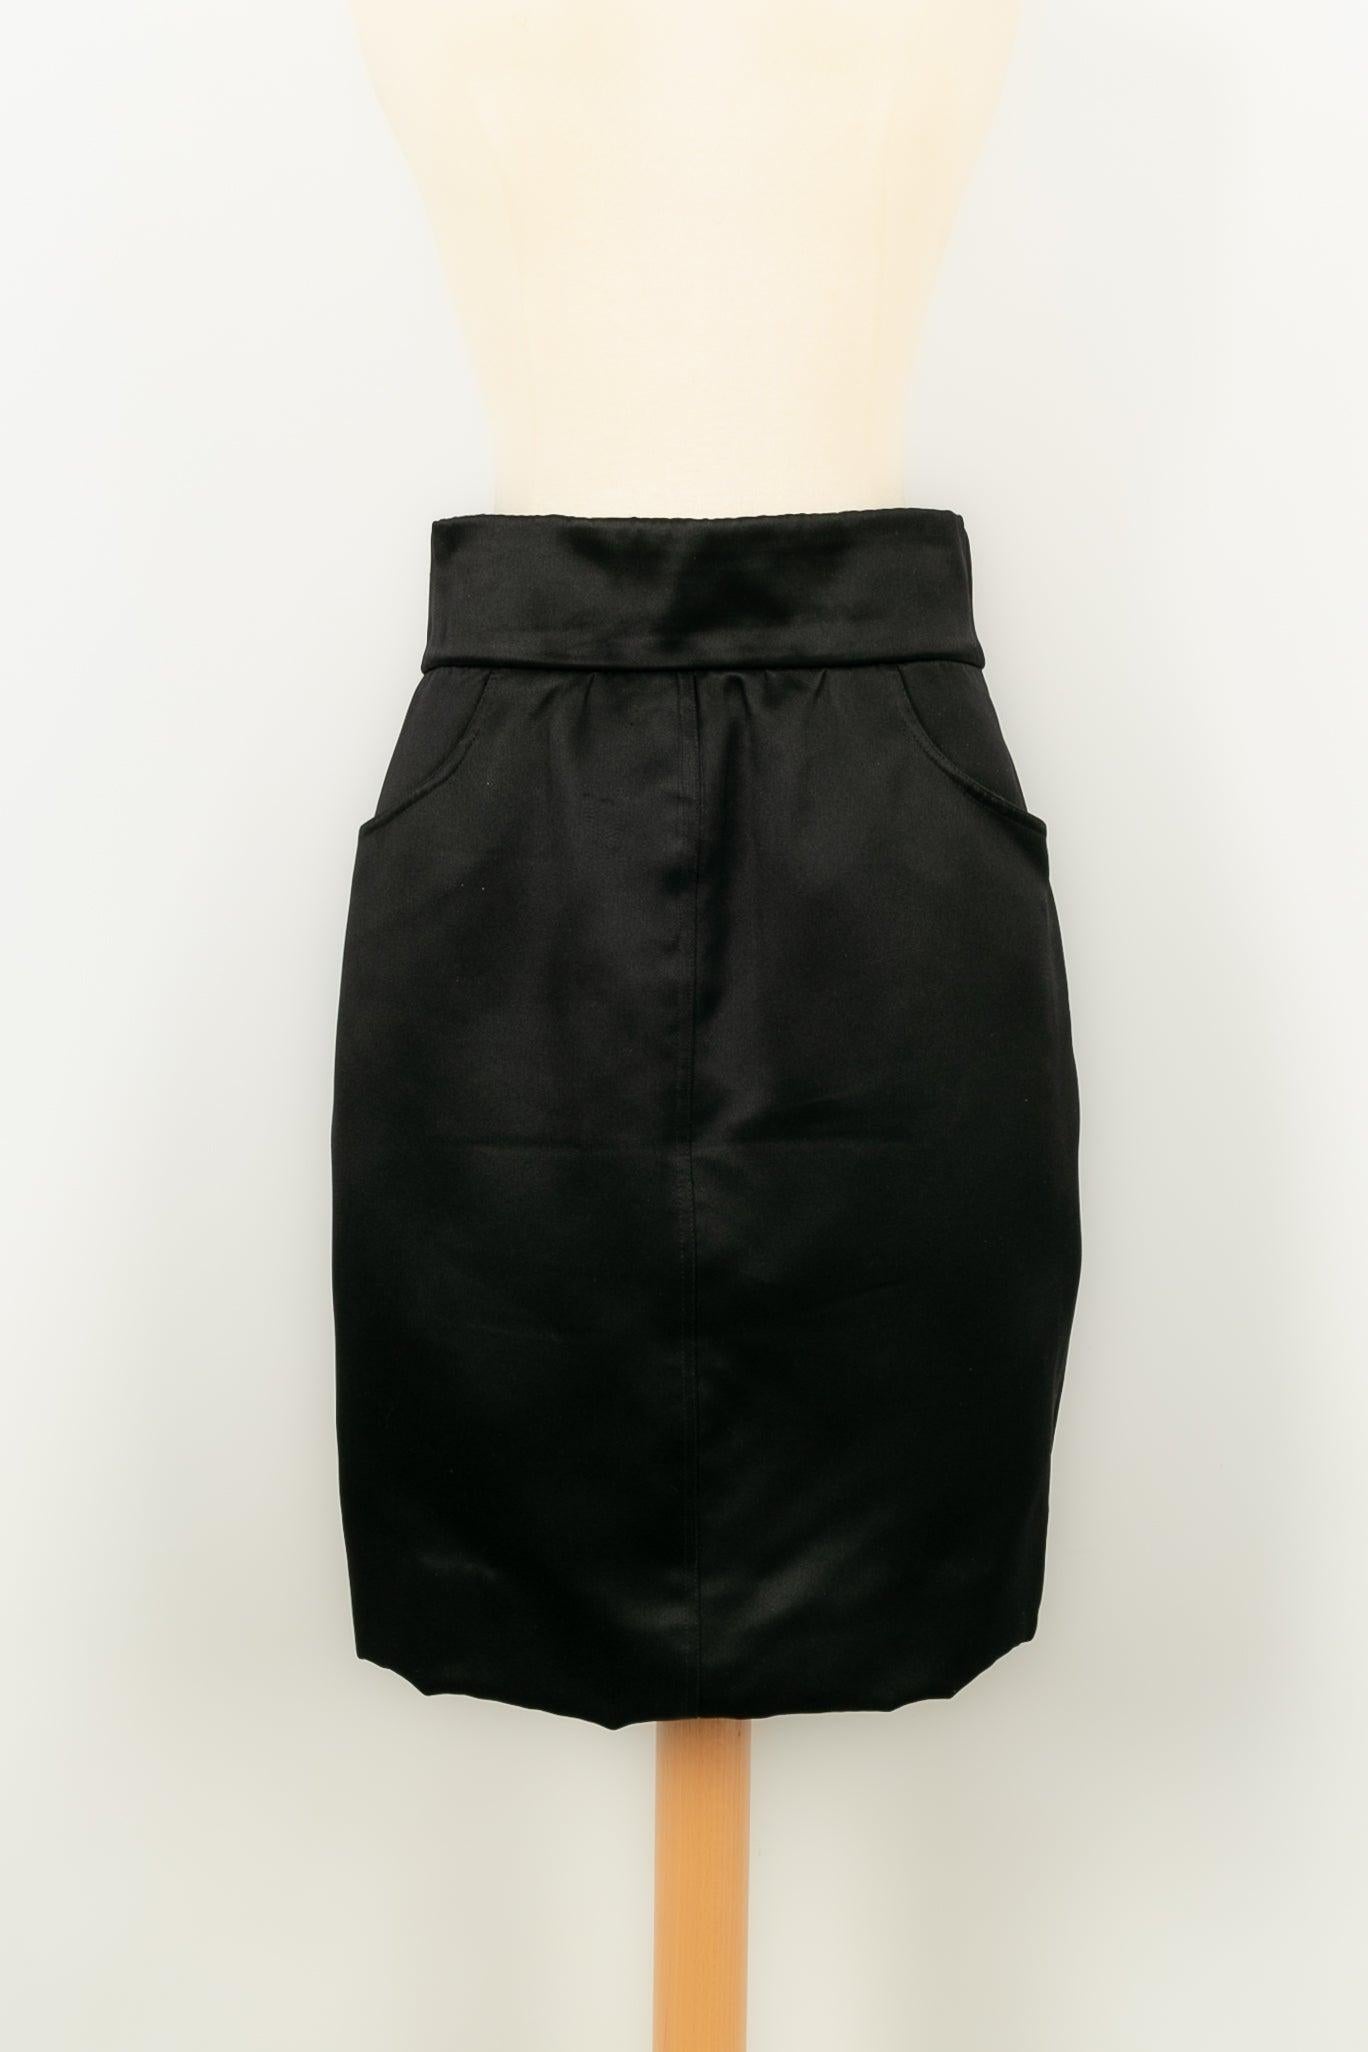 Christian Lacroix Haute Couture Set Composed of Black Velvet Jacket For Sale 4